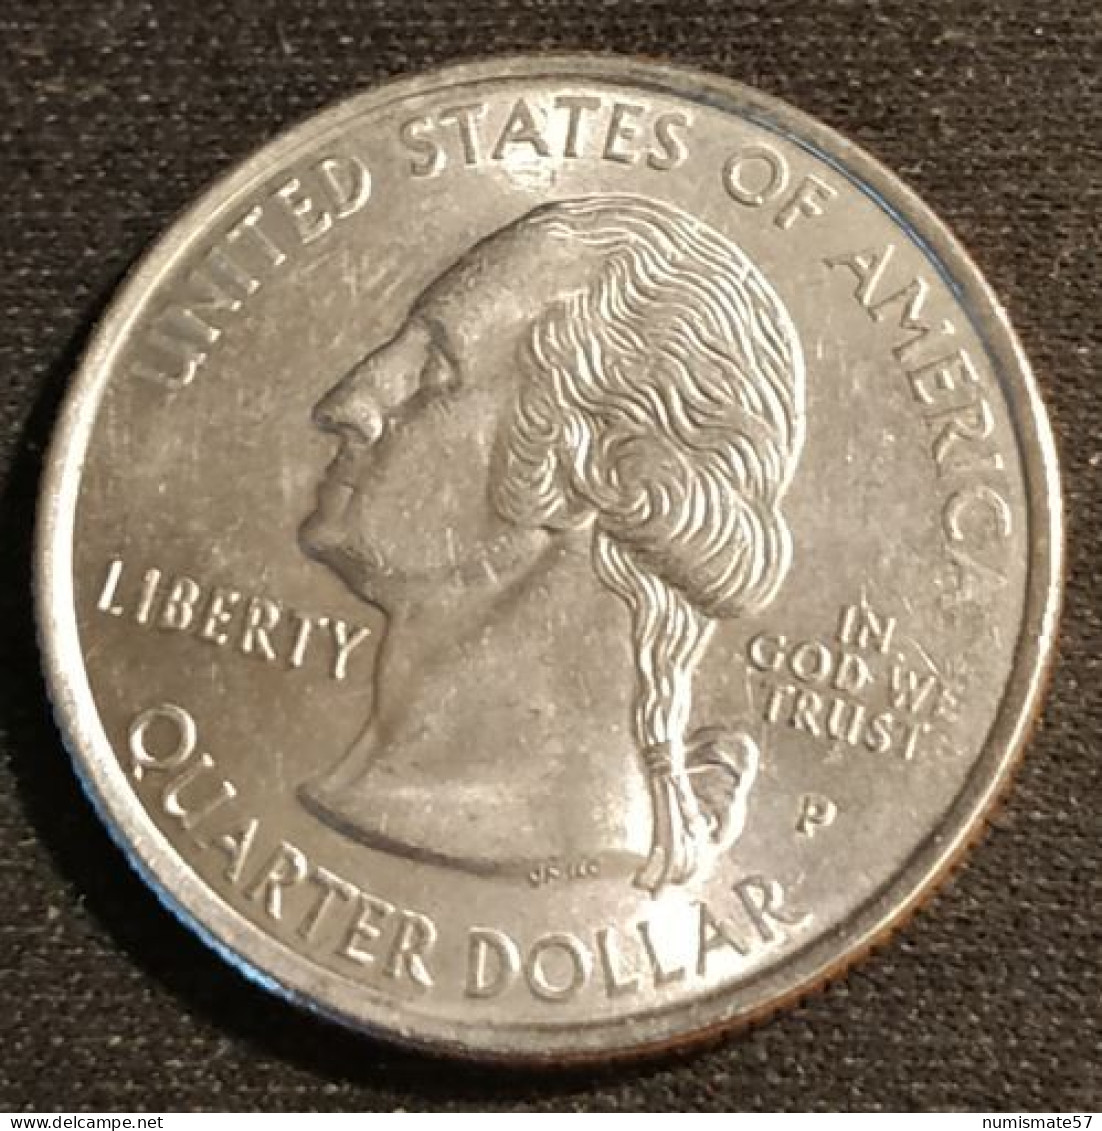 ETATS UNIS - USA - ¼ - 1/4 DOLLAR 1999 P - New Jersey - KM 295 - Quarter Dollar - 1999-2009: State Quarters